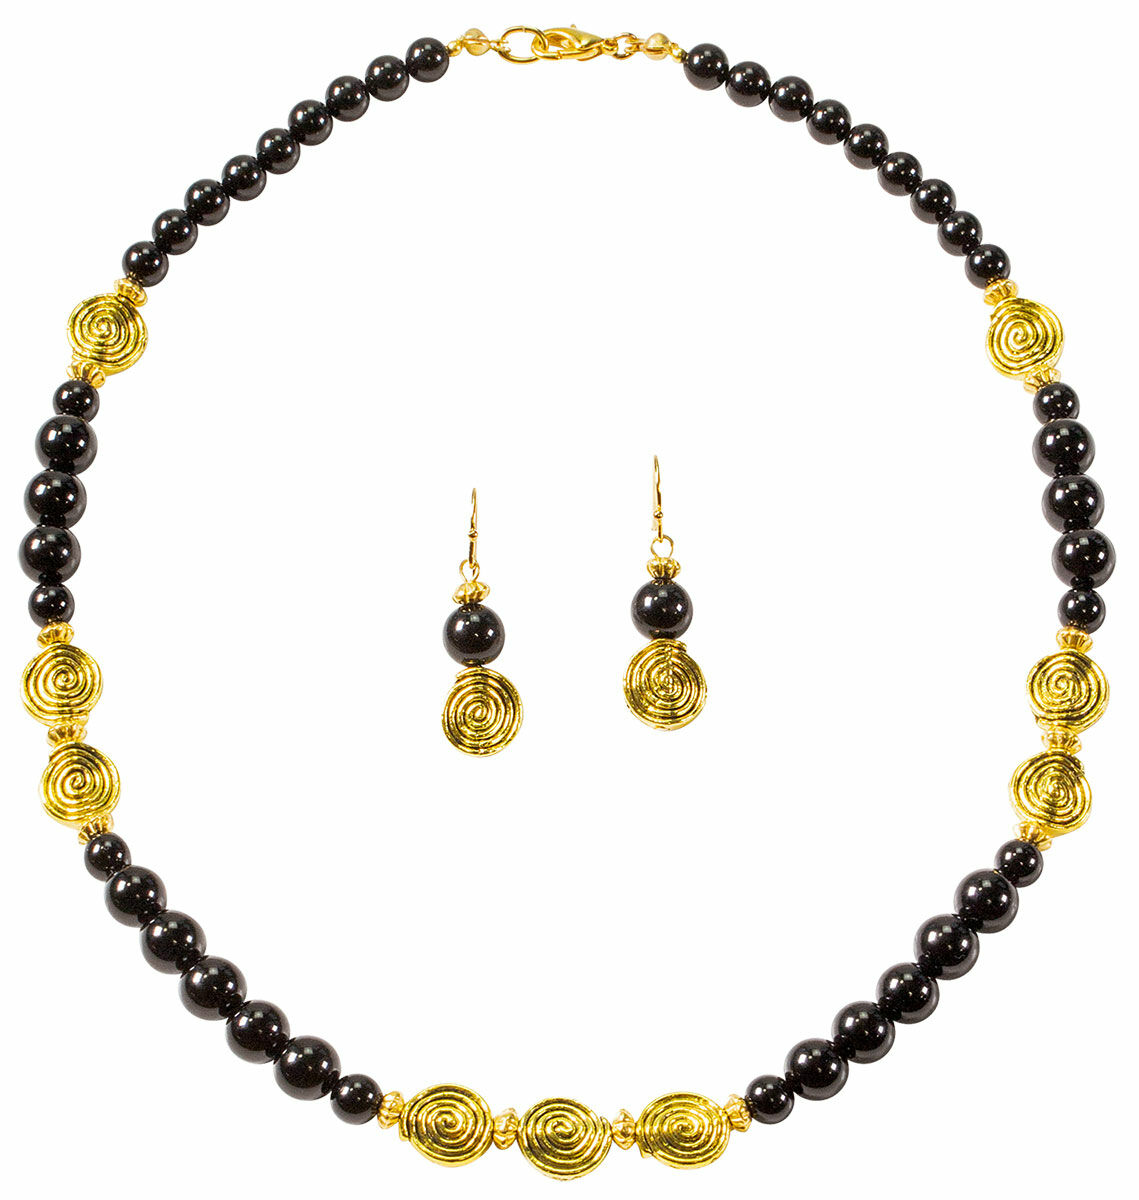 Pearl jewellery set "Margarethe" - after Gustav Klimt